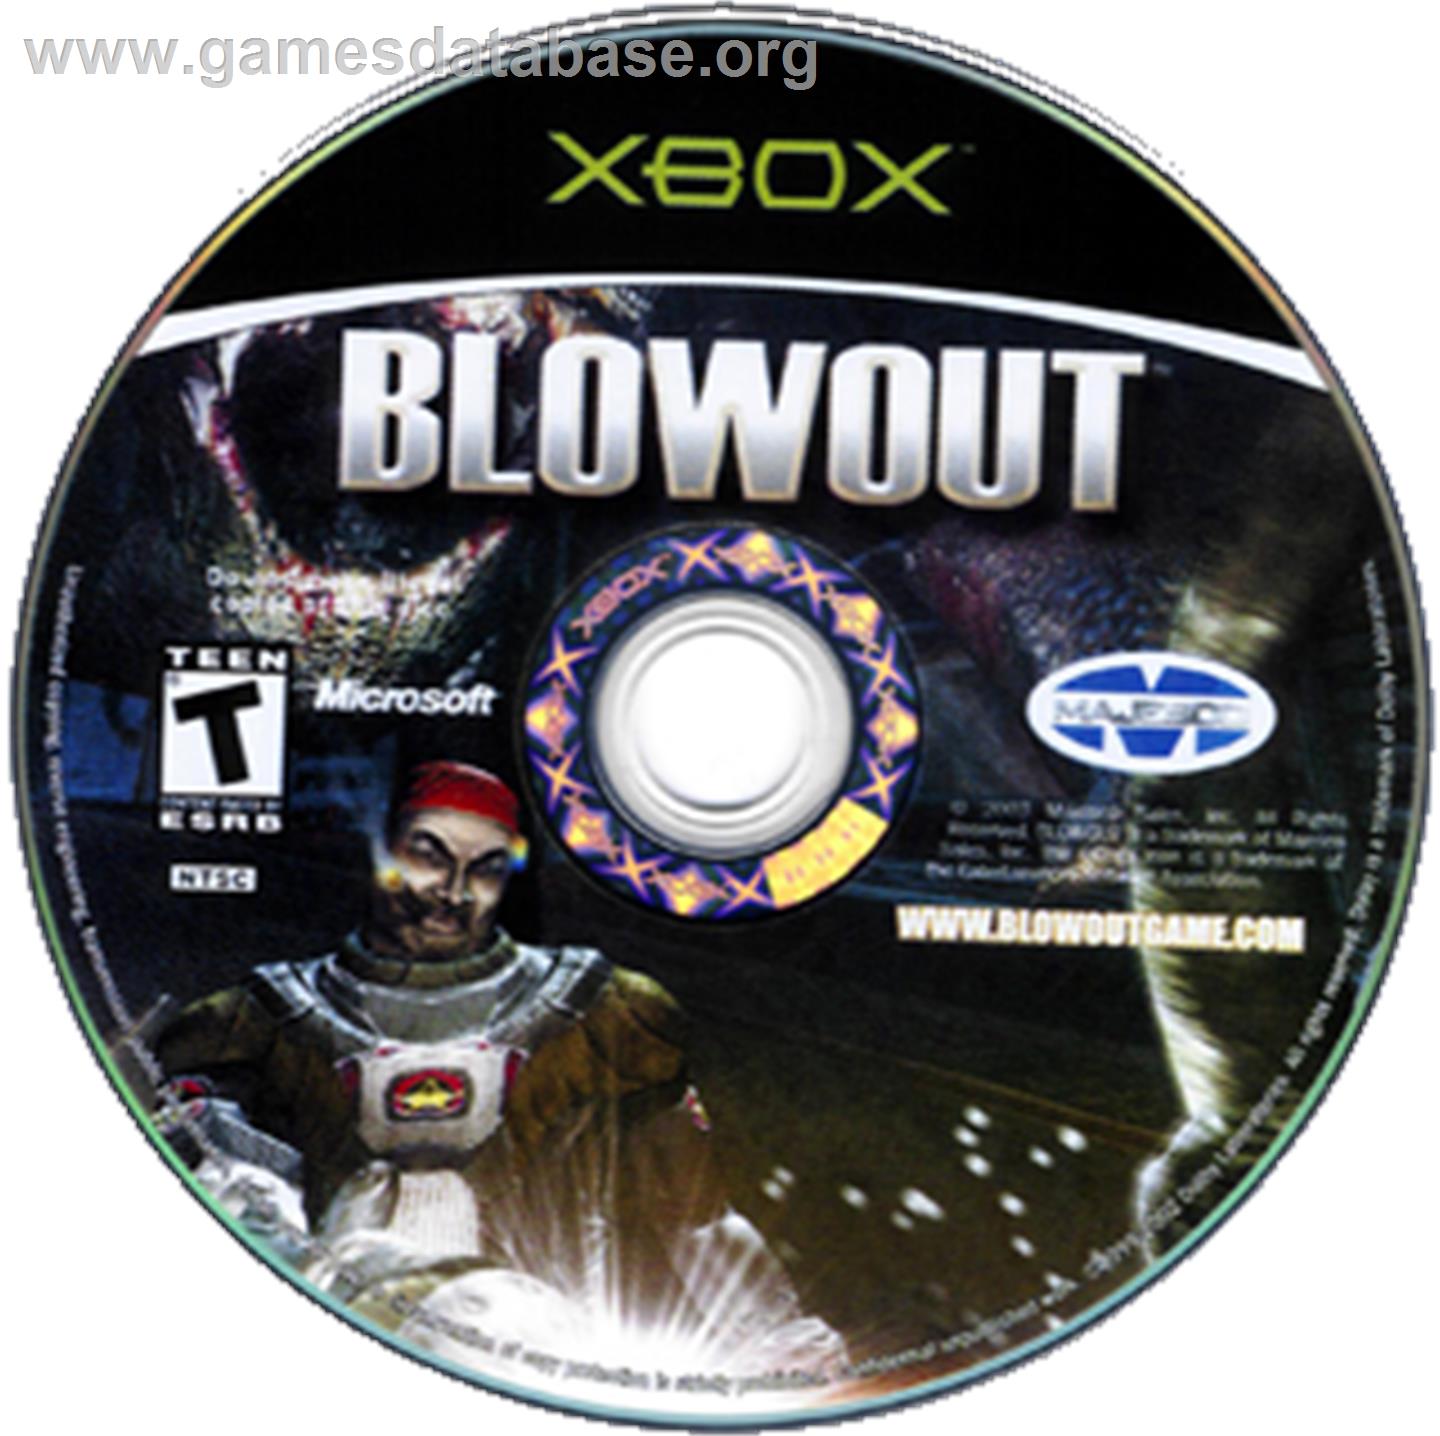 Blowout - Microsoft Xbox - Artwork - CD